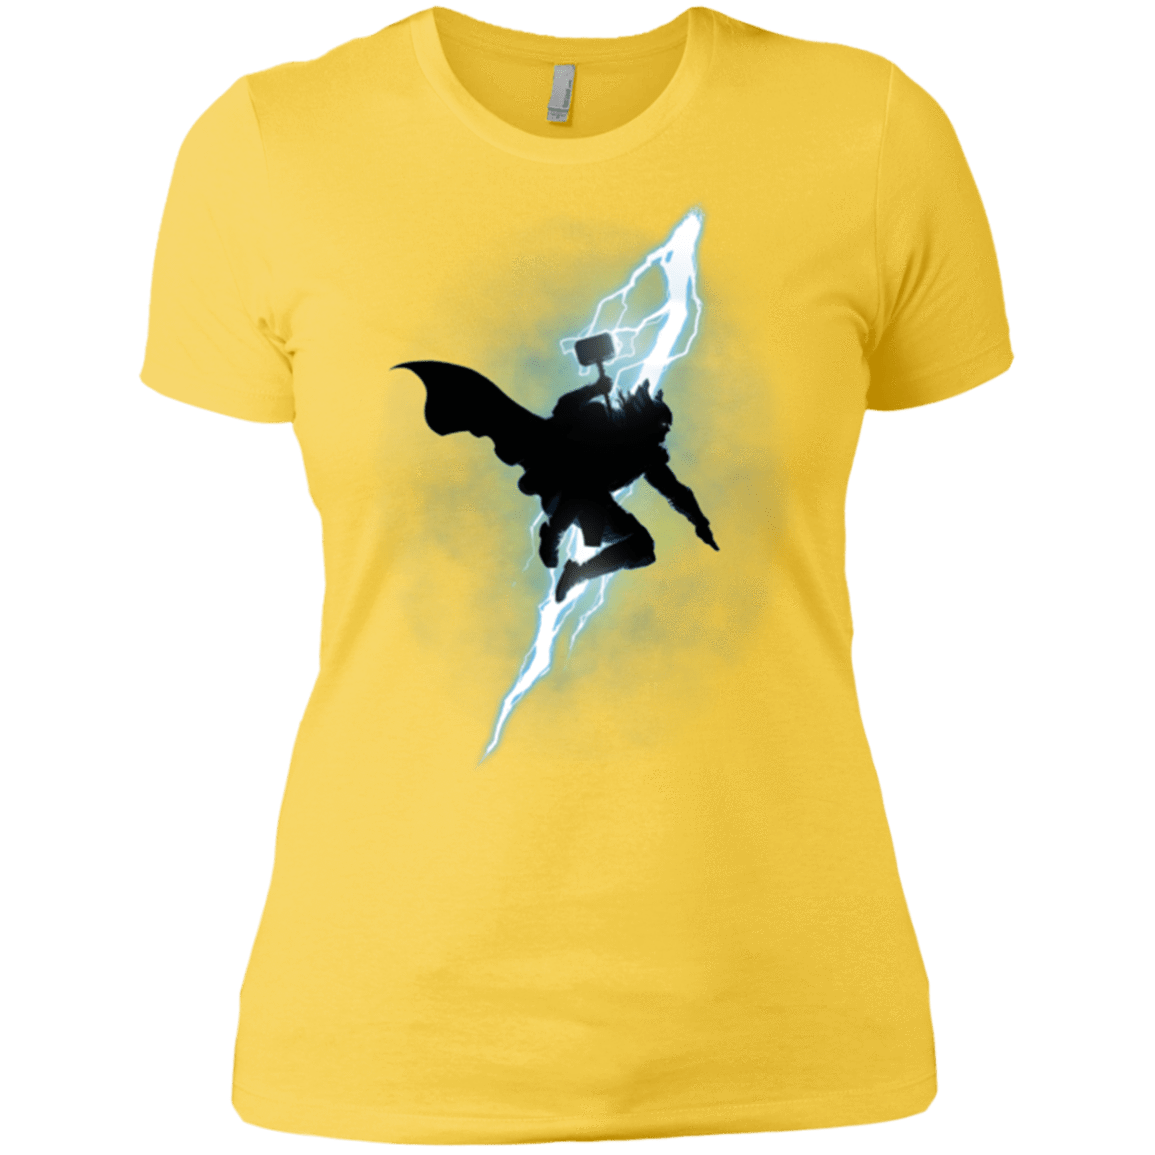 T-Shirts Vibrant Yellow / X-Small The Thunder God Returns Women's Premium T-Shirt